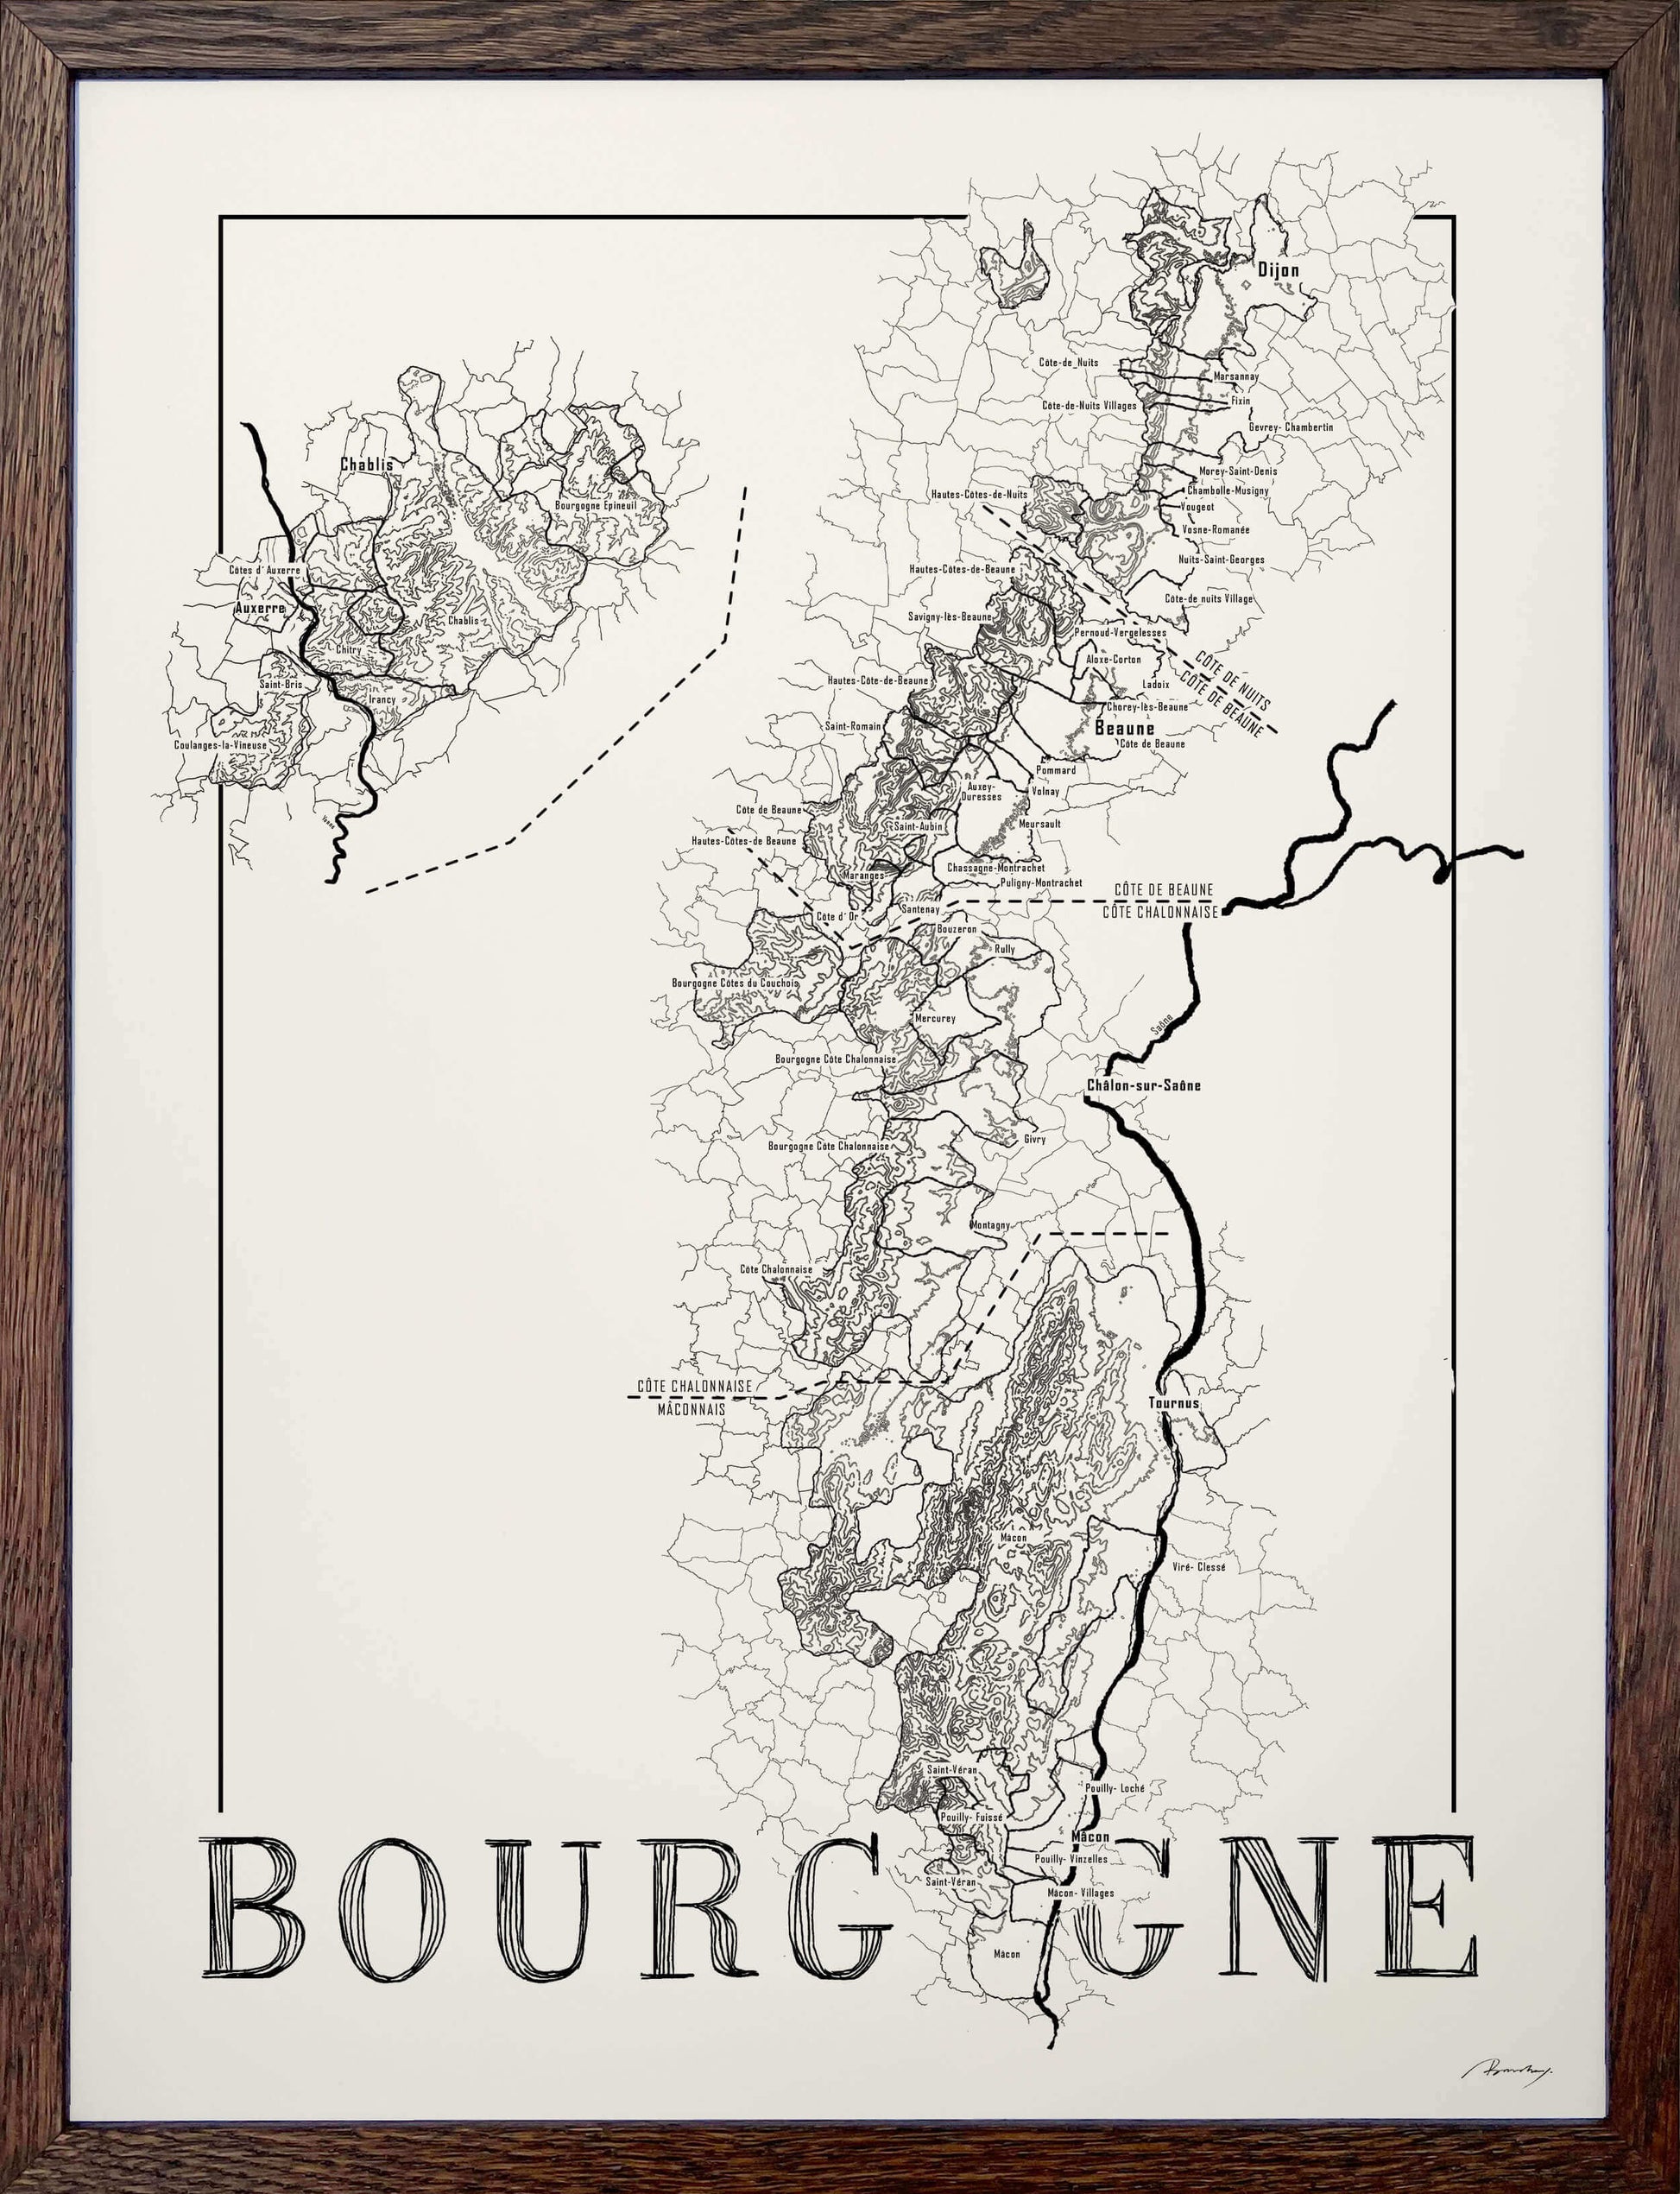 Bourgogne Wine map poster. Wine art. Wine print. Wine poster. Exclusive wine map posters. Premium quality wine maps printed on environmentally friendly FSC marked paper. 